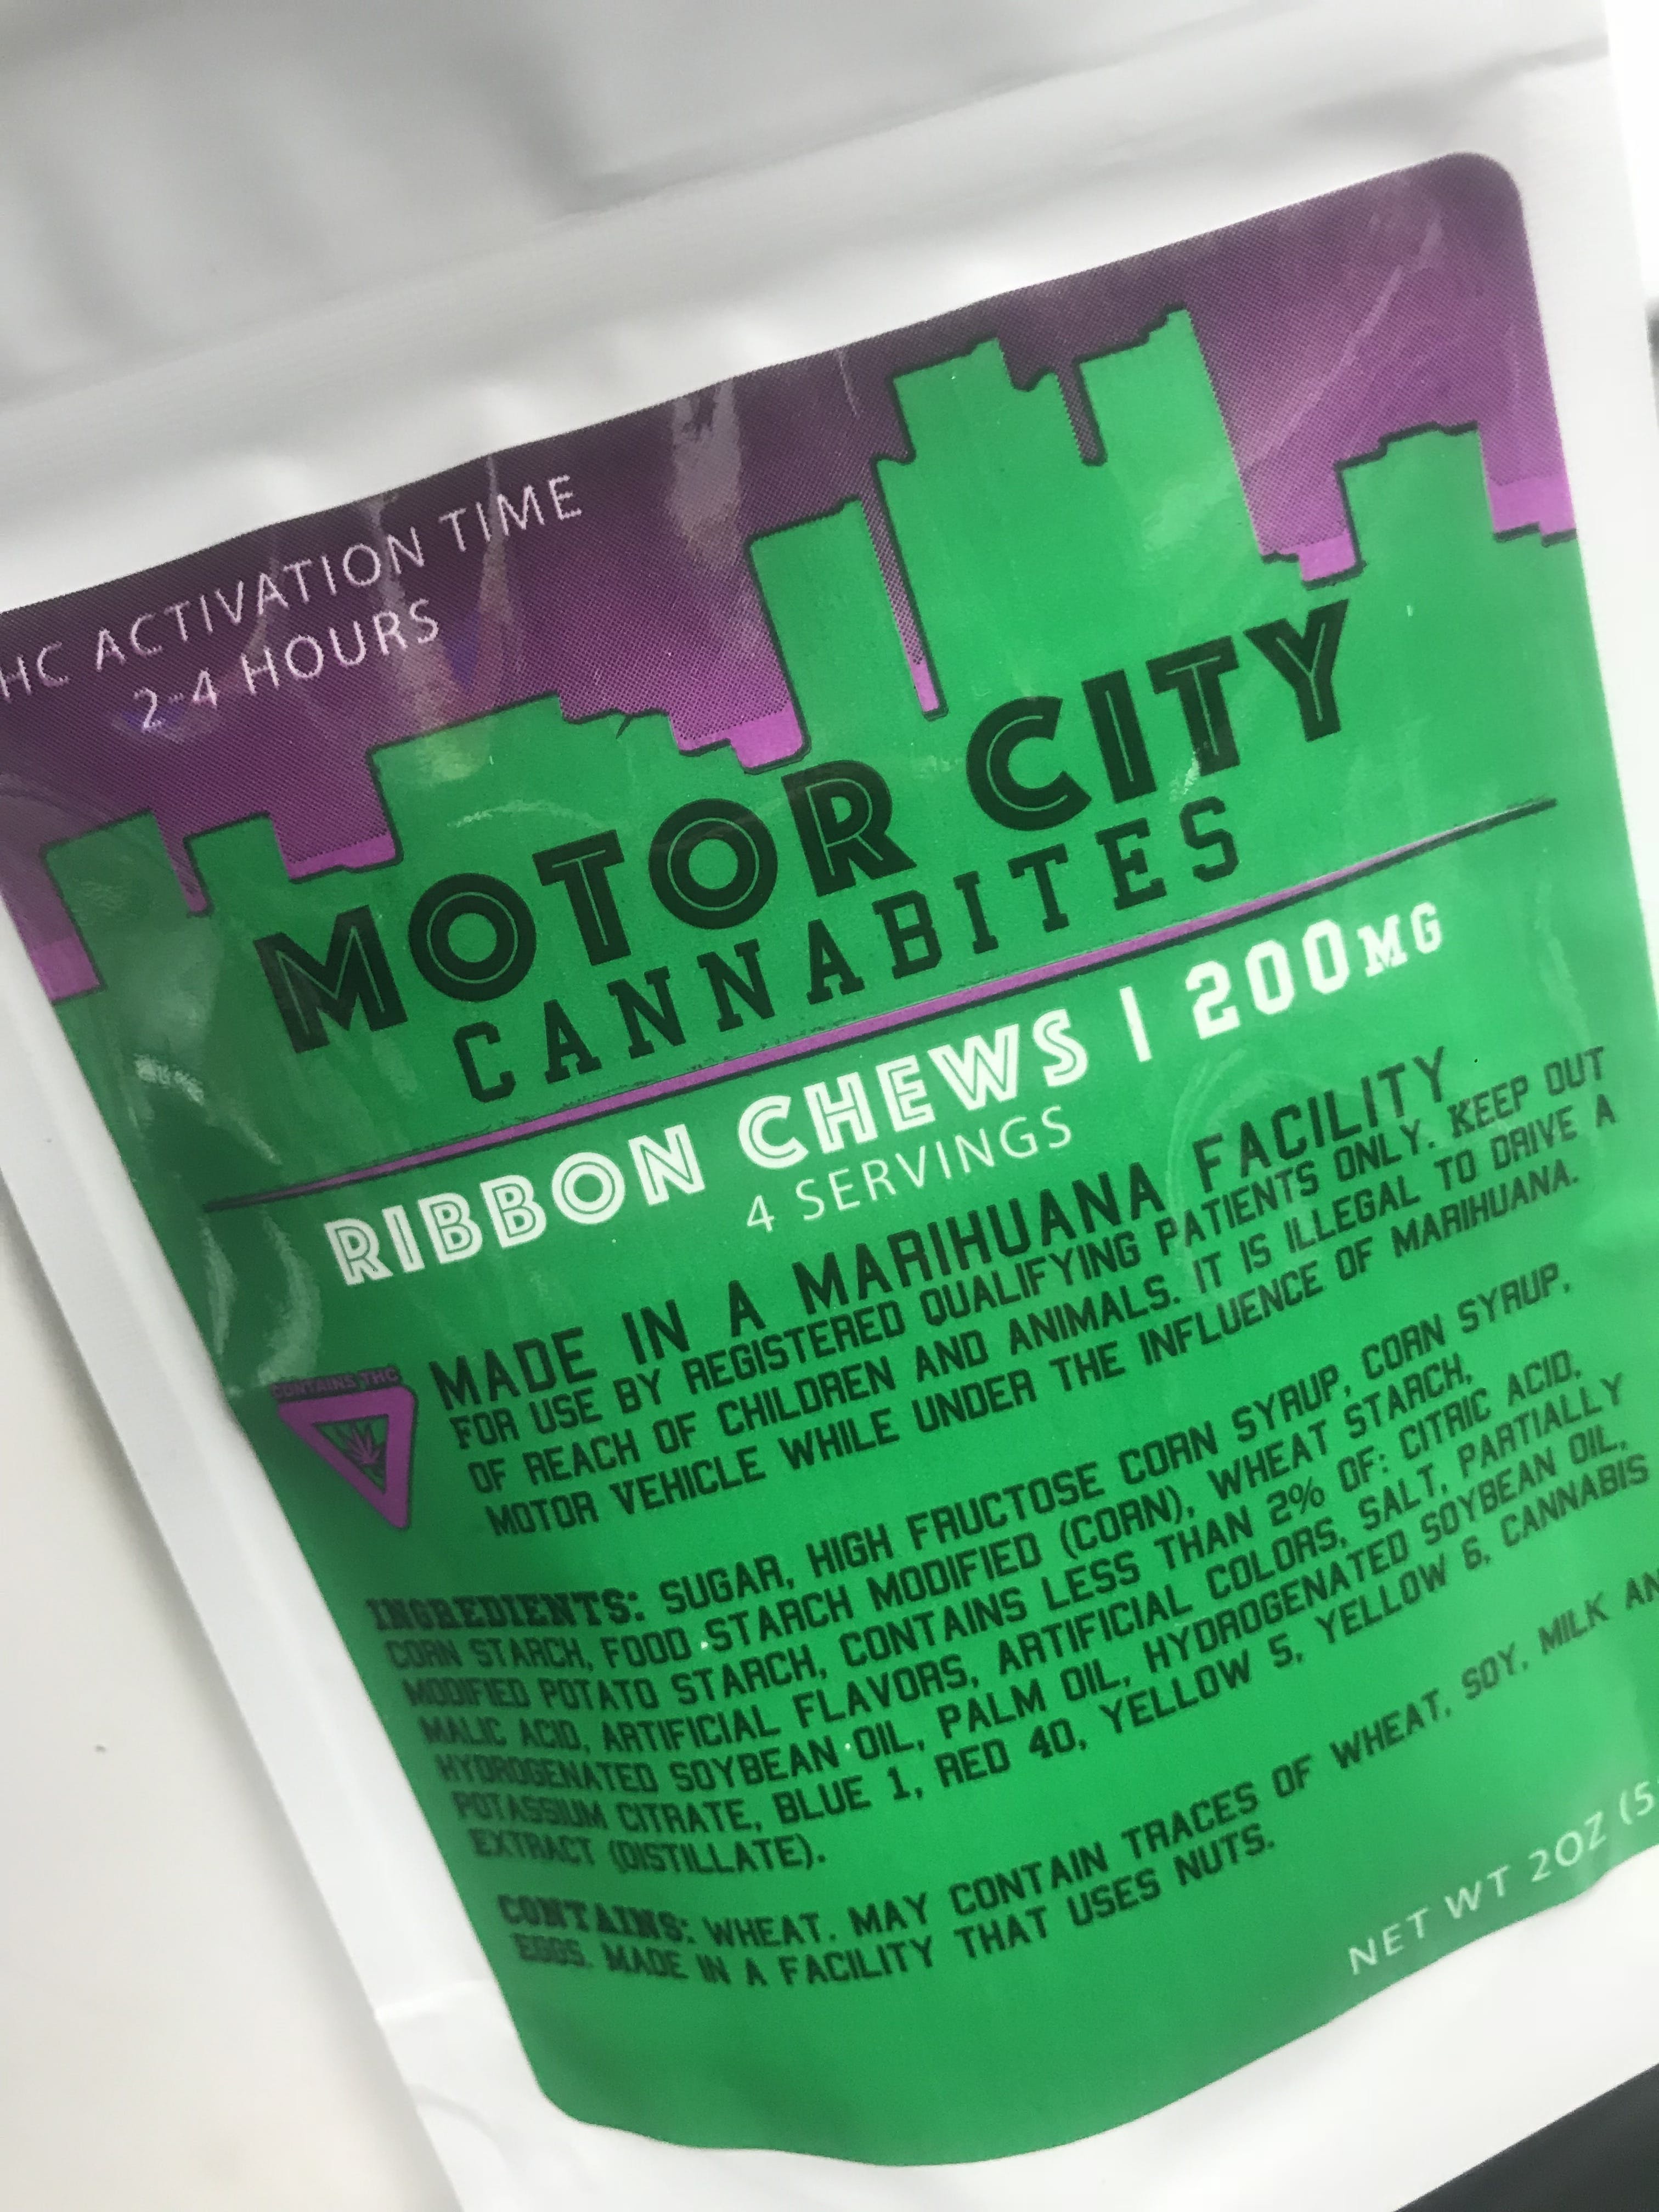 edible-motor-city-cannabites-ribbon-chews